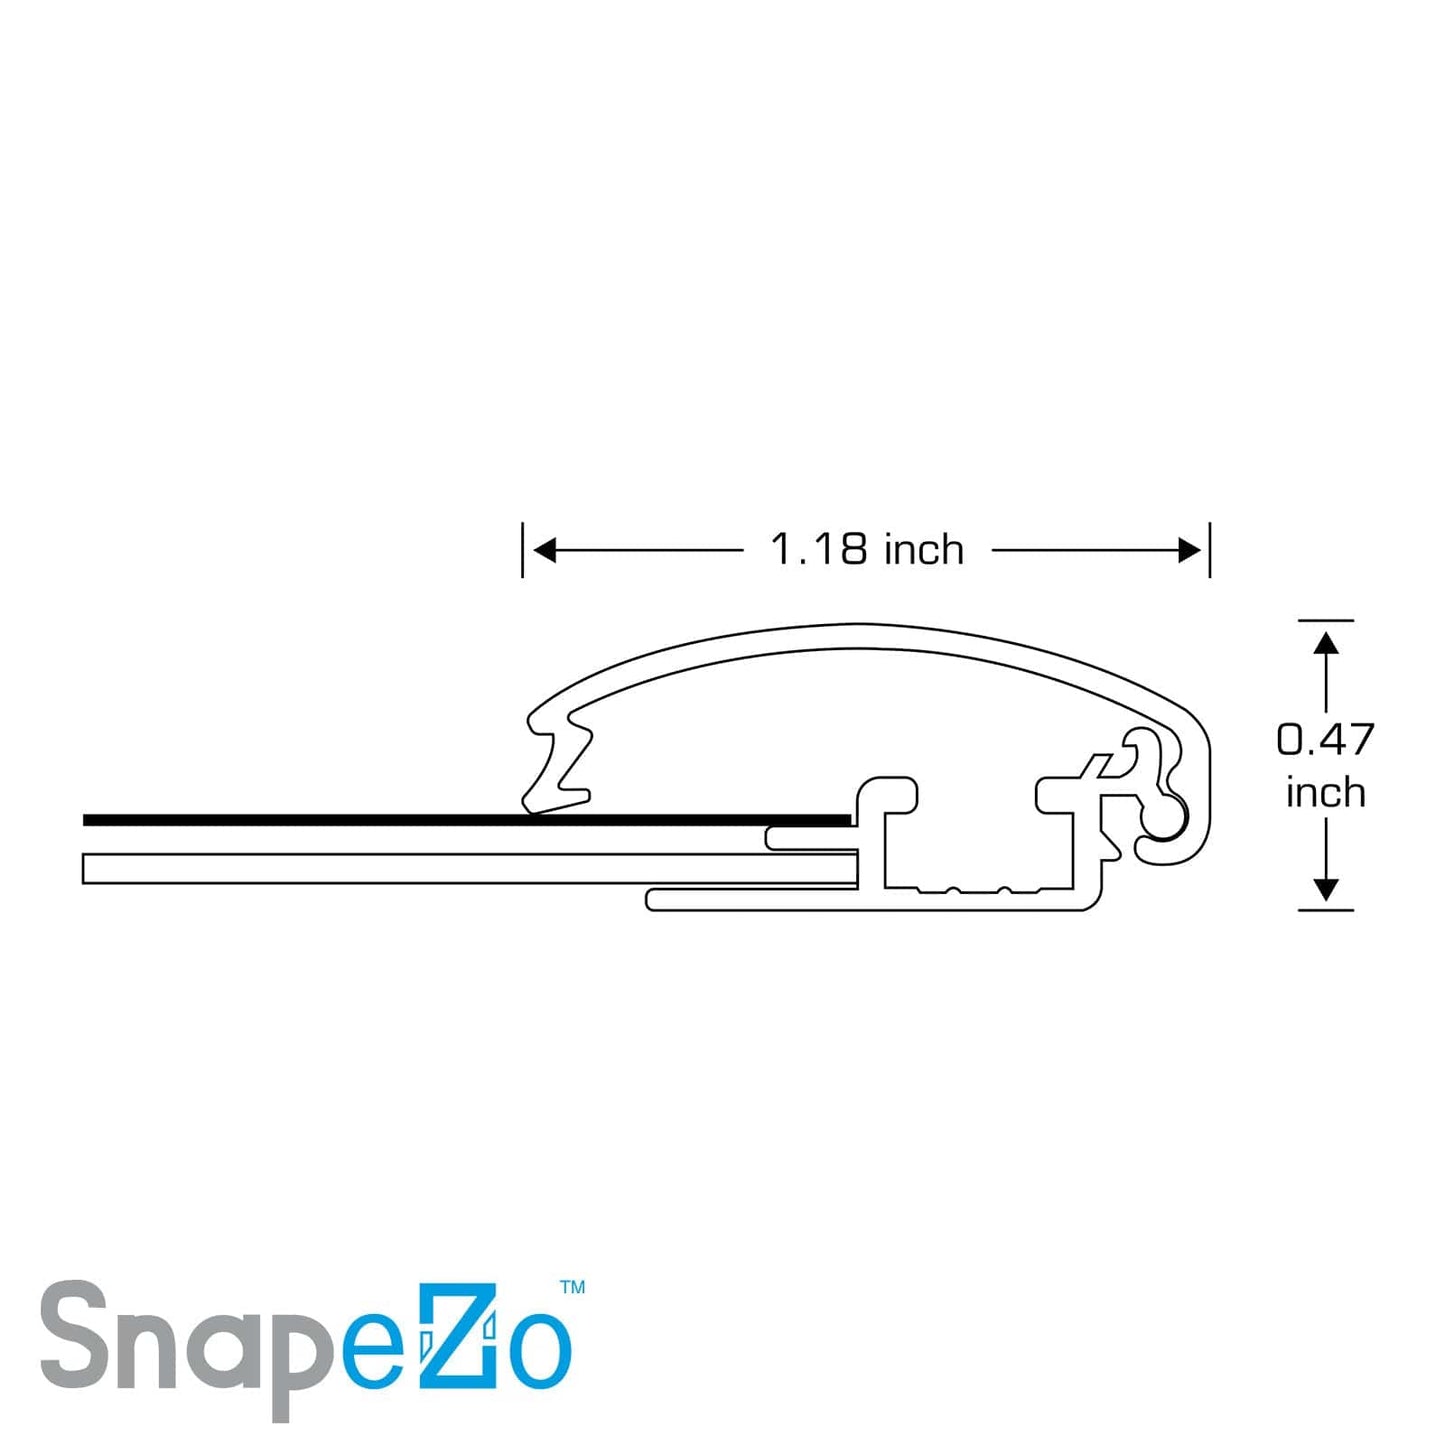 13x22 Black SnapeZo® Snap Frame - 1.2" Profile - Snap Frames Direct